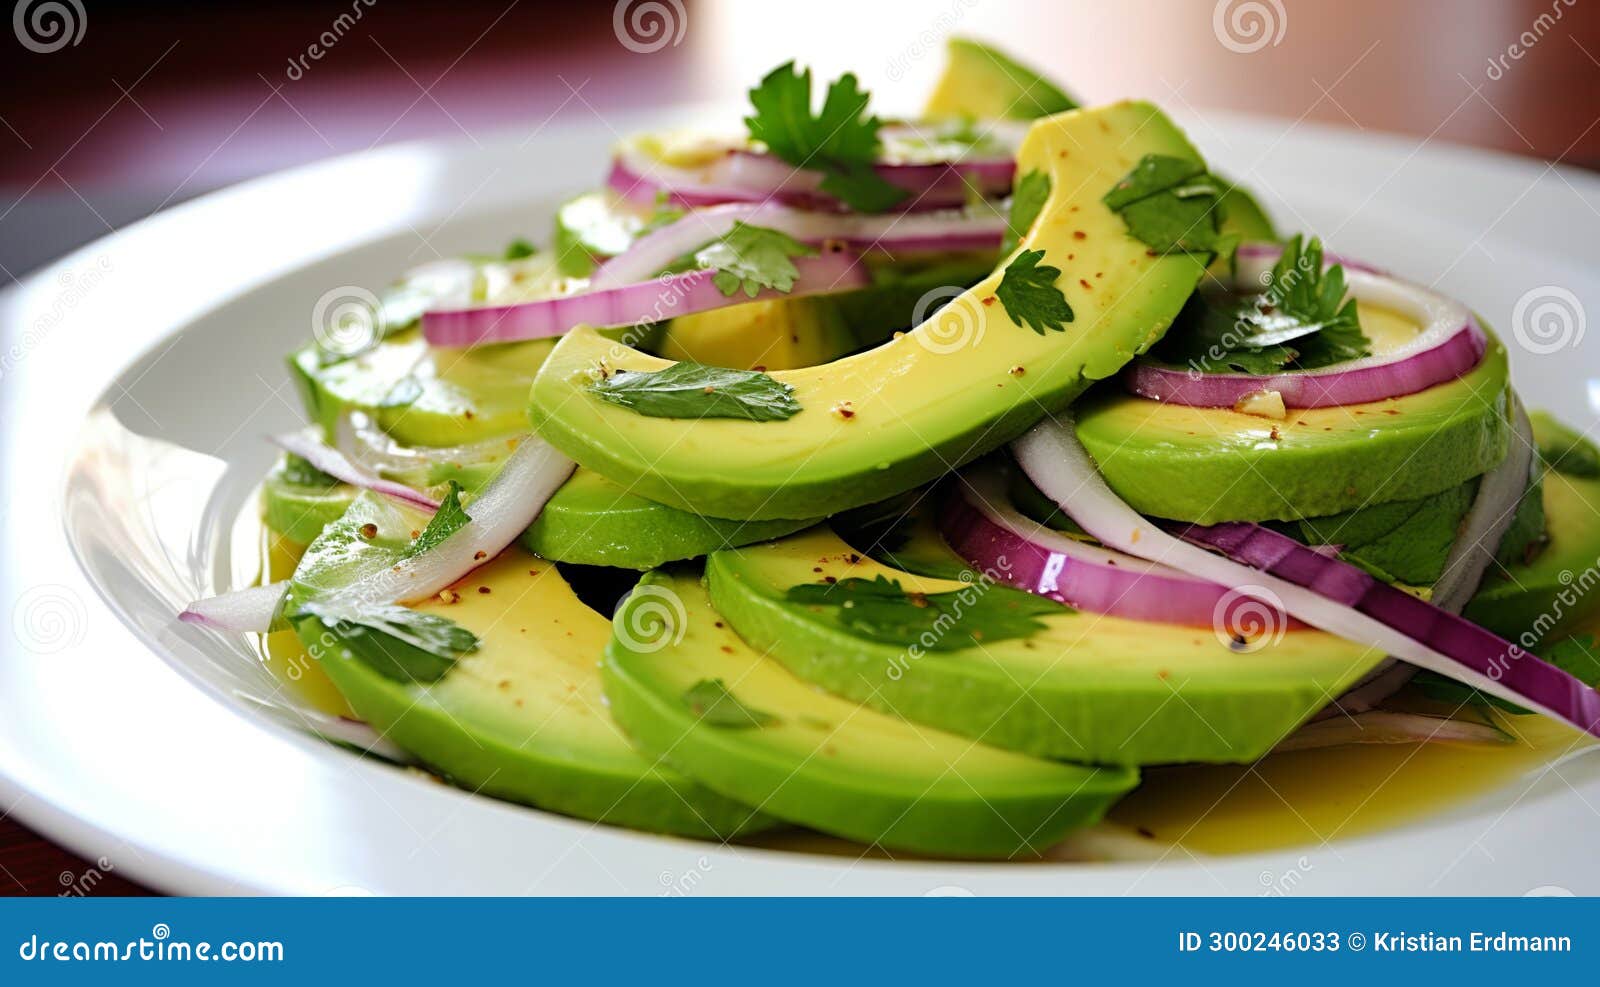 ensalada de aguacate: refreshing avocado salad with onion and lime